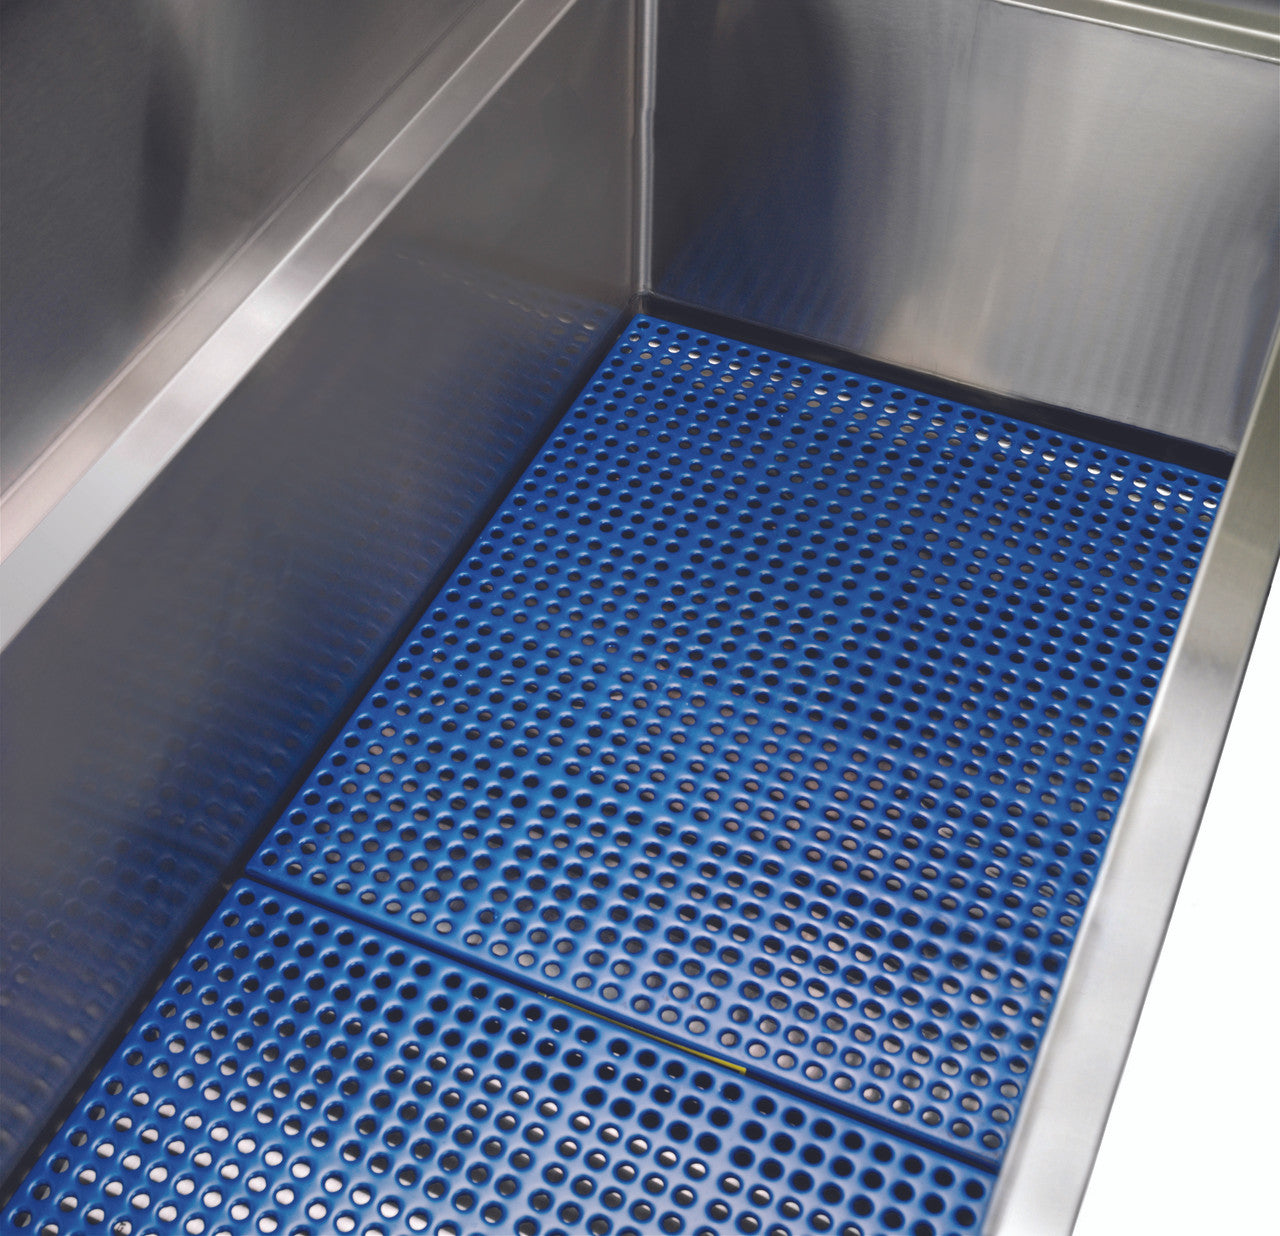 Shor-line PVC coated tub floors